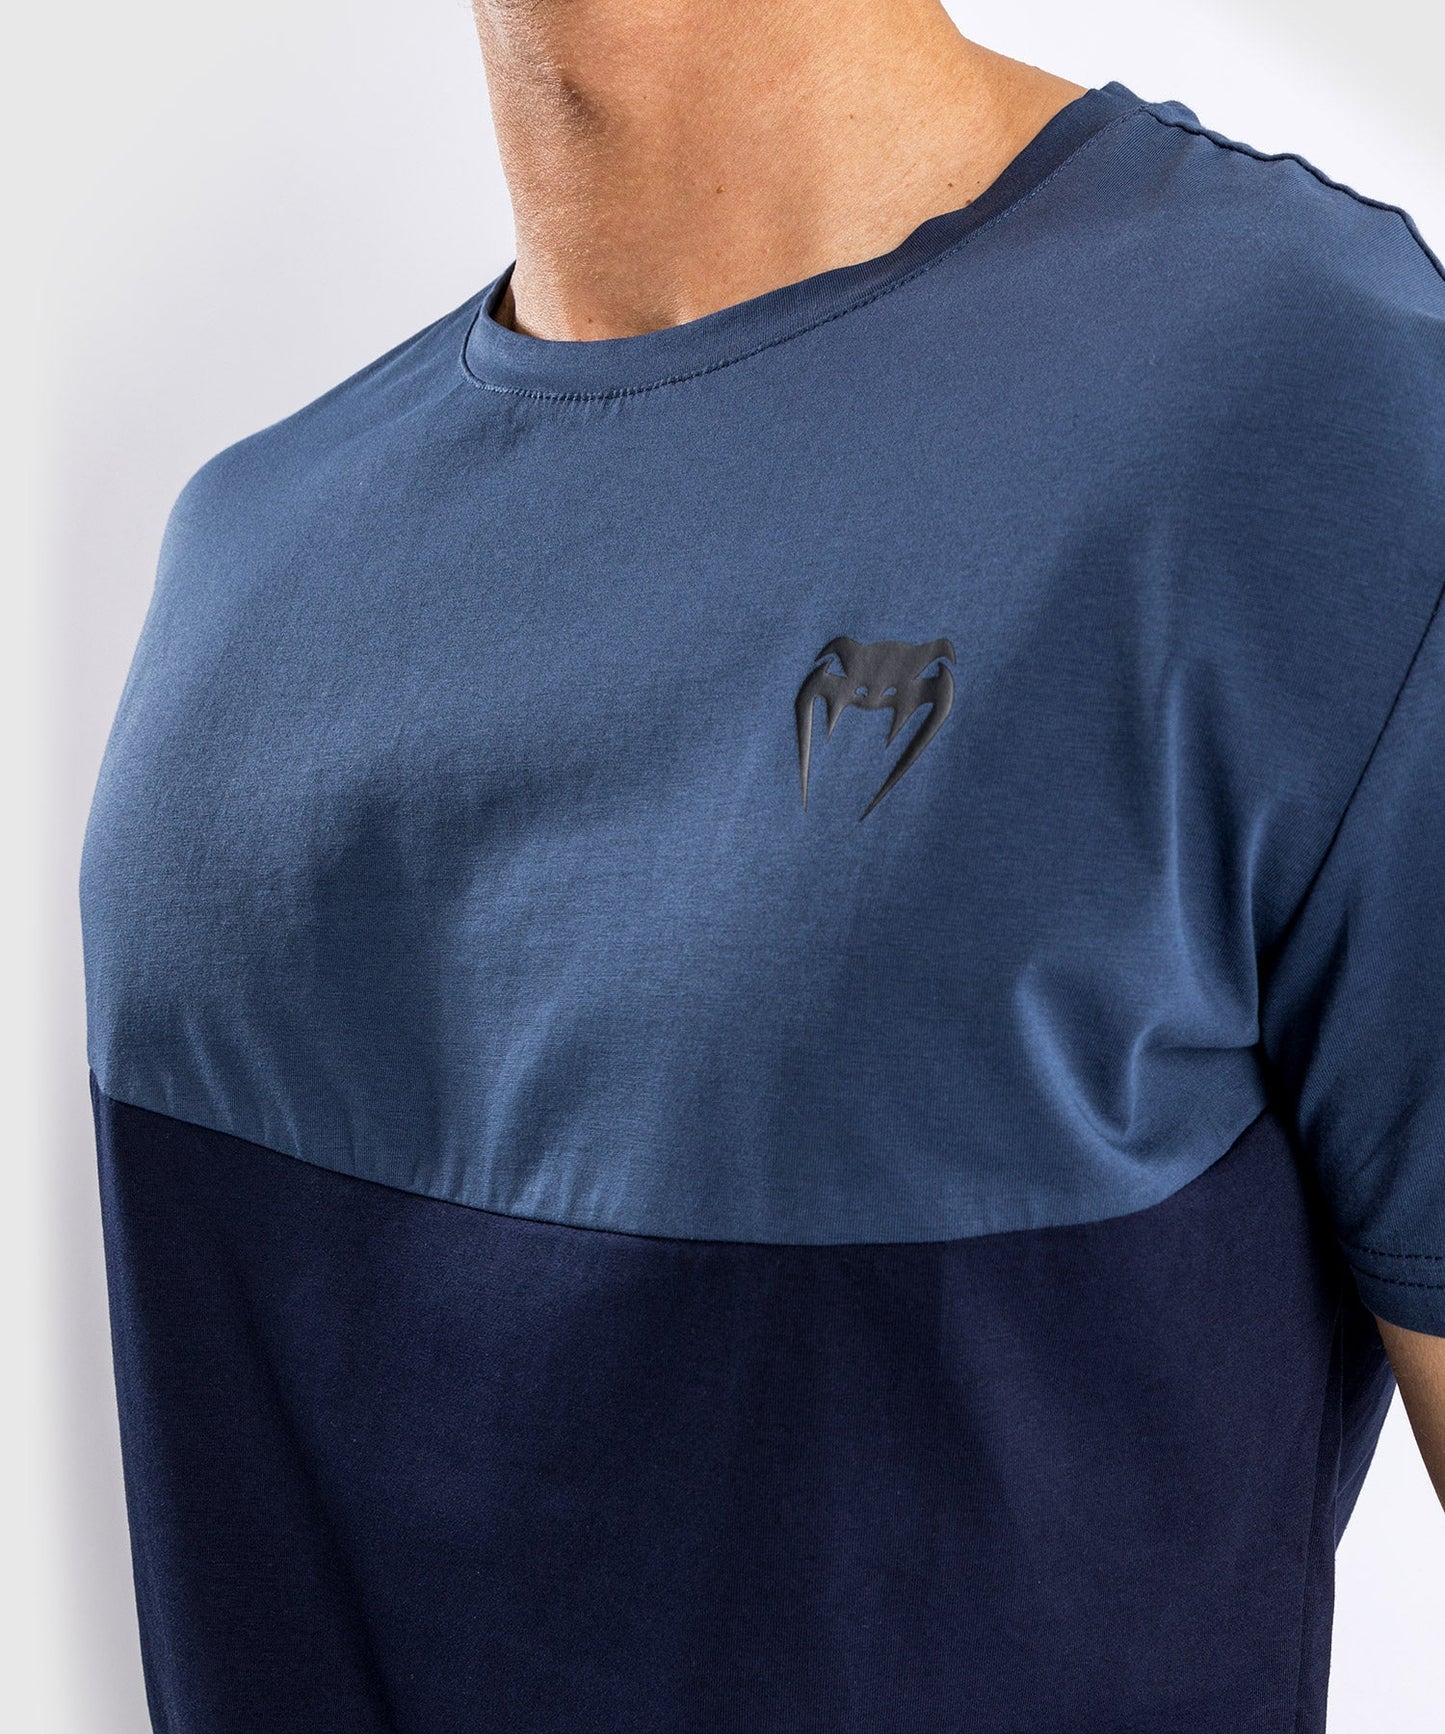 Venum Laser T-shirt - Navy Blue